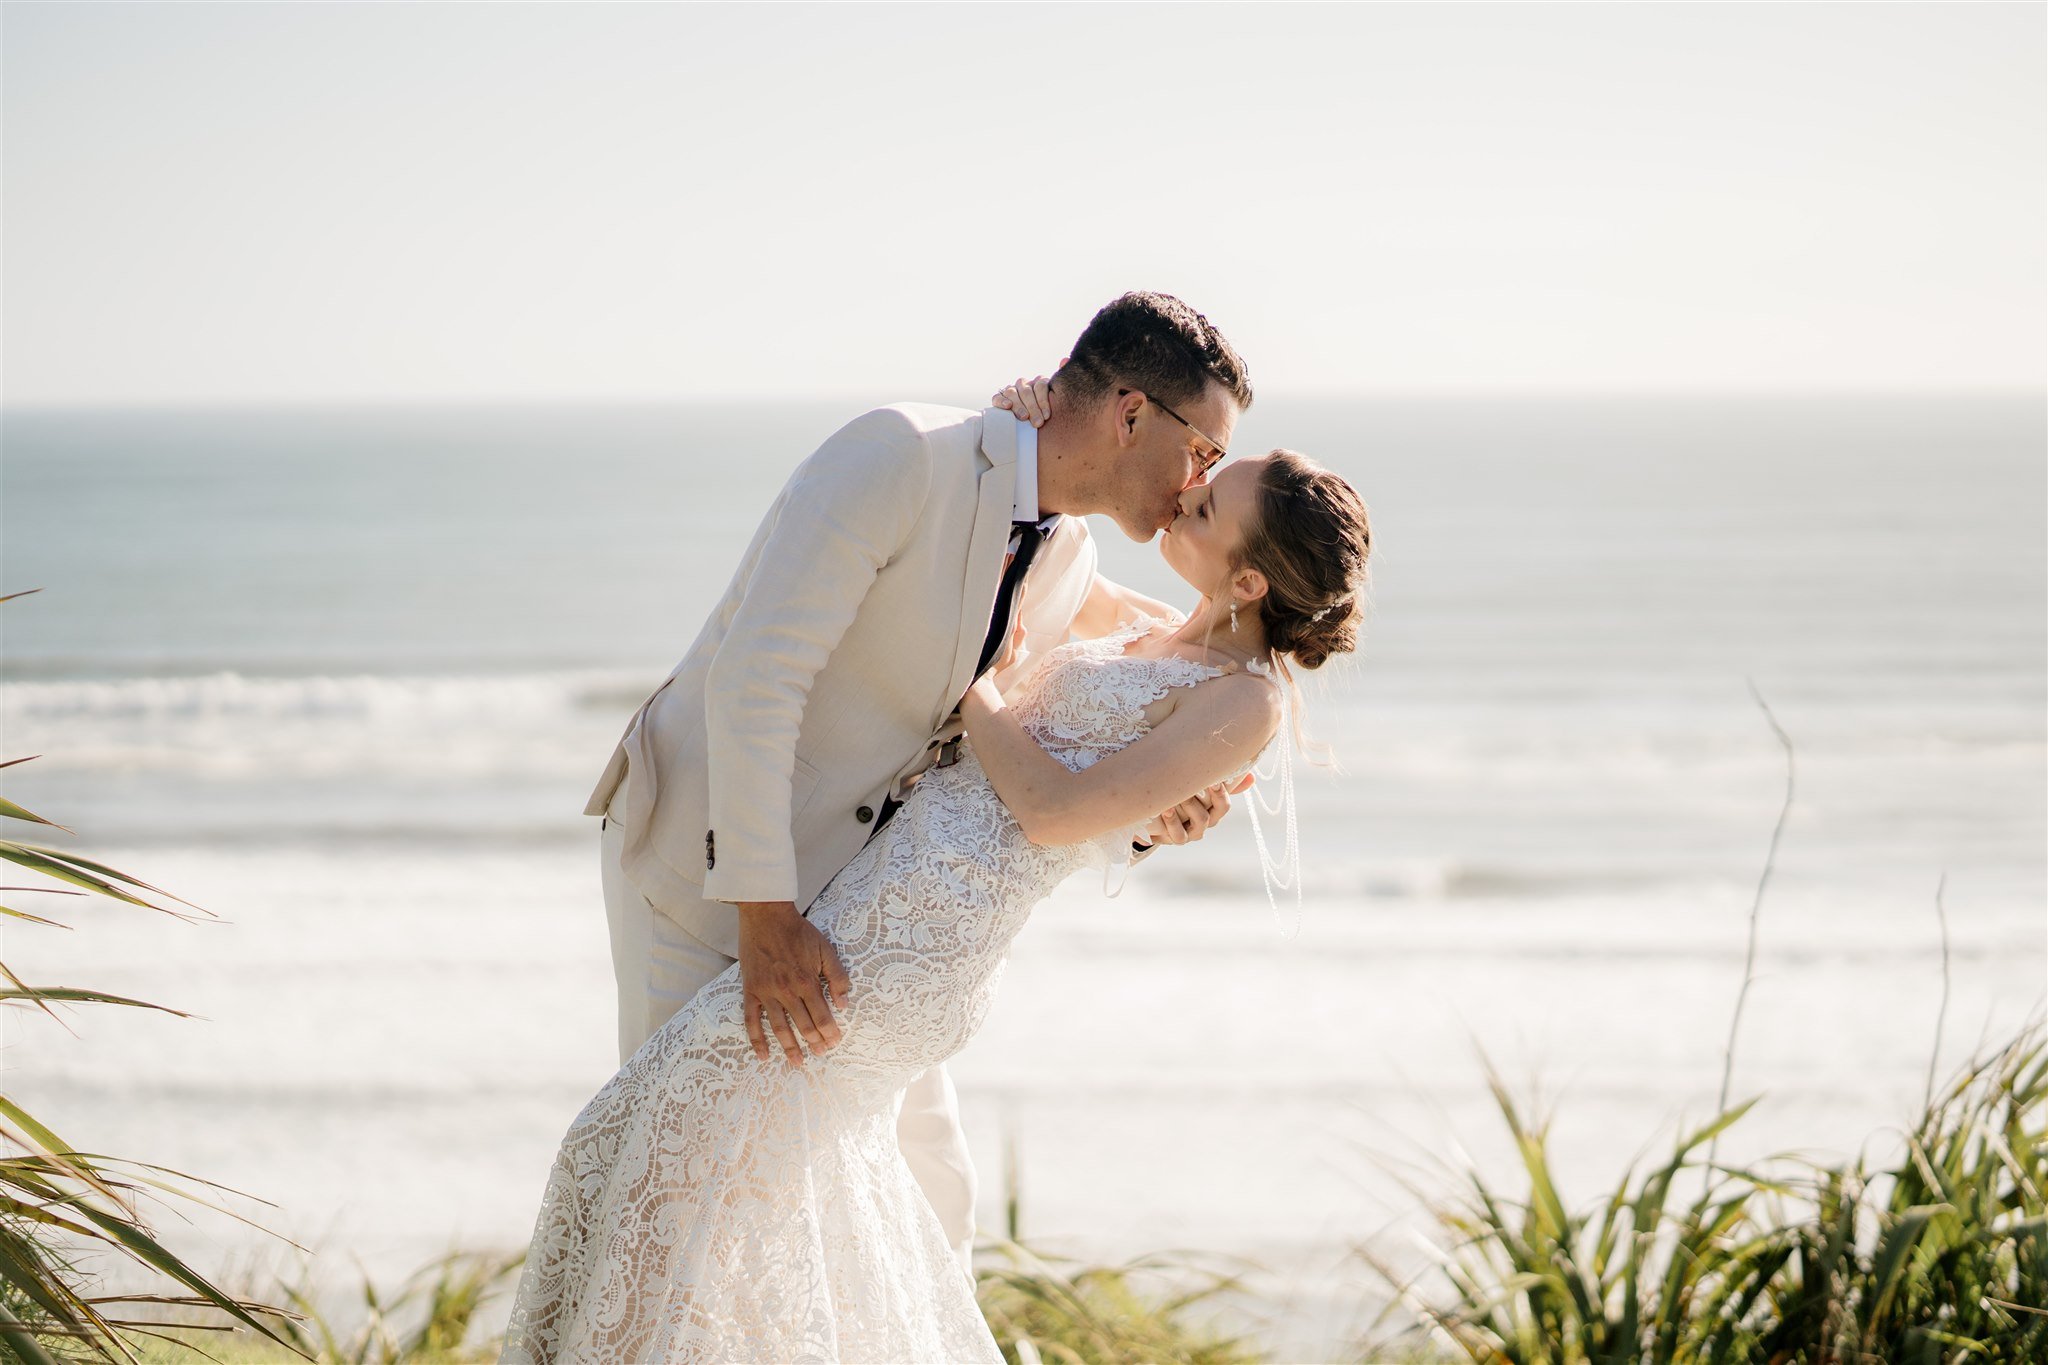 castaways-NZ-new-zealand-auckland-wedding-photographer-photography-videography-film-dear-white-productions-best-venue-waiuku-engagement-elopement-style-beach-intimate (250).jpg